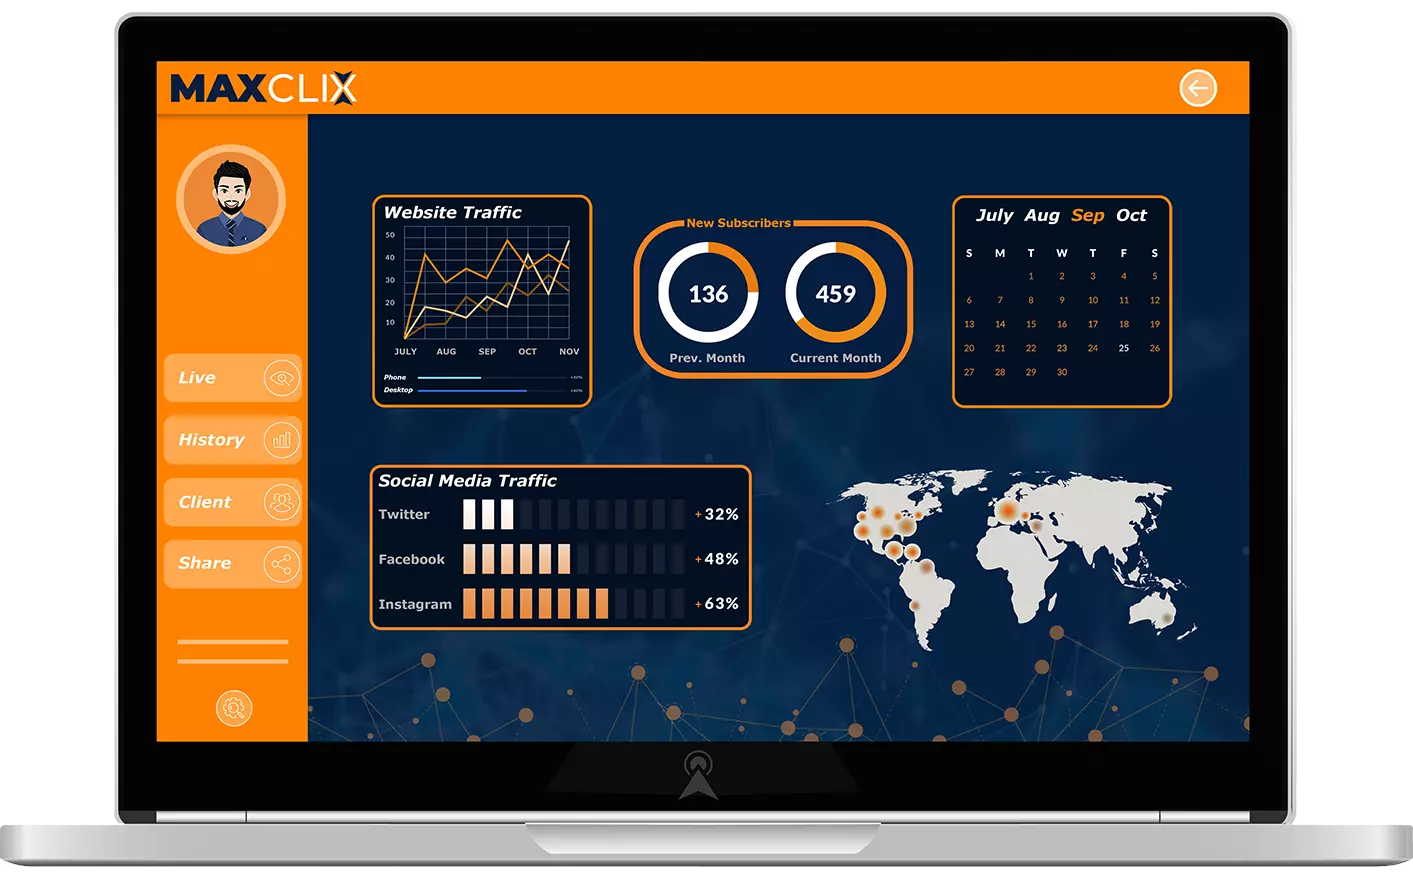 Maxclix SEO results and analytics